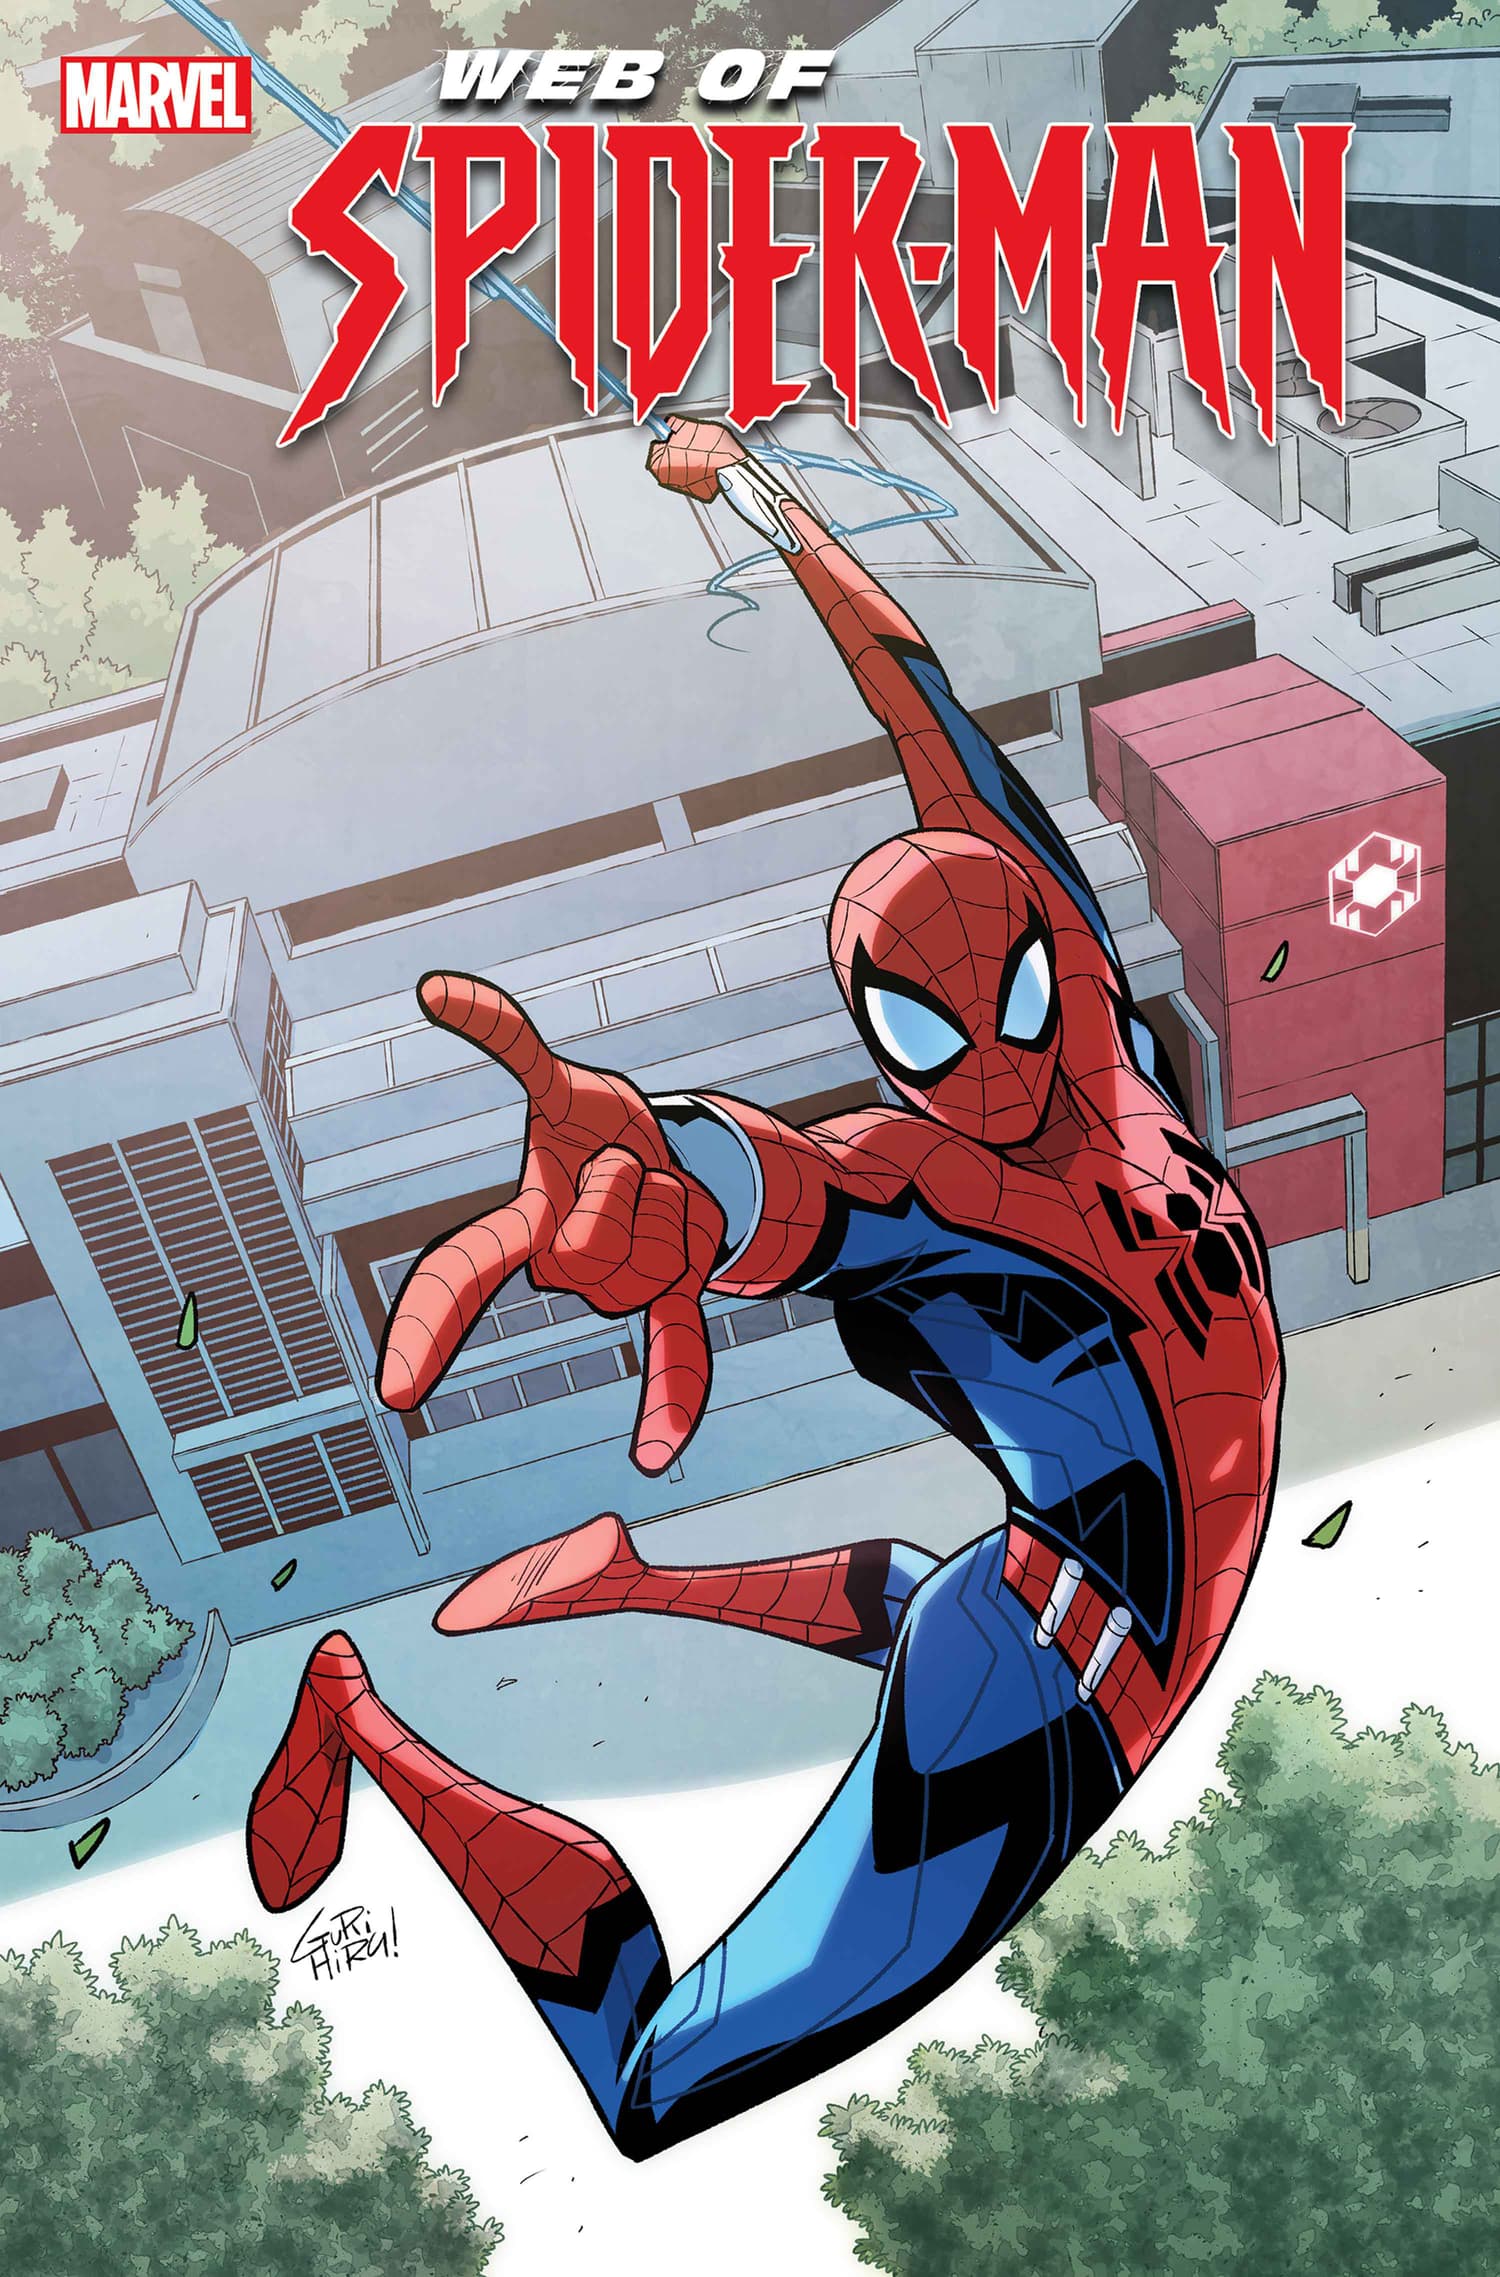 WEB of Spider-Man #1